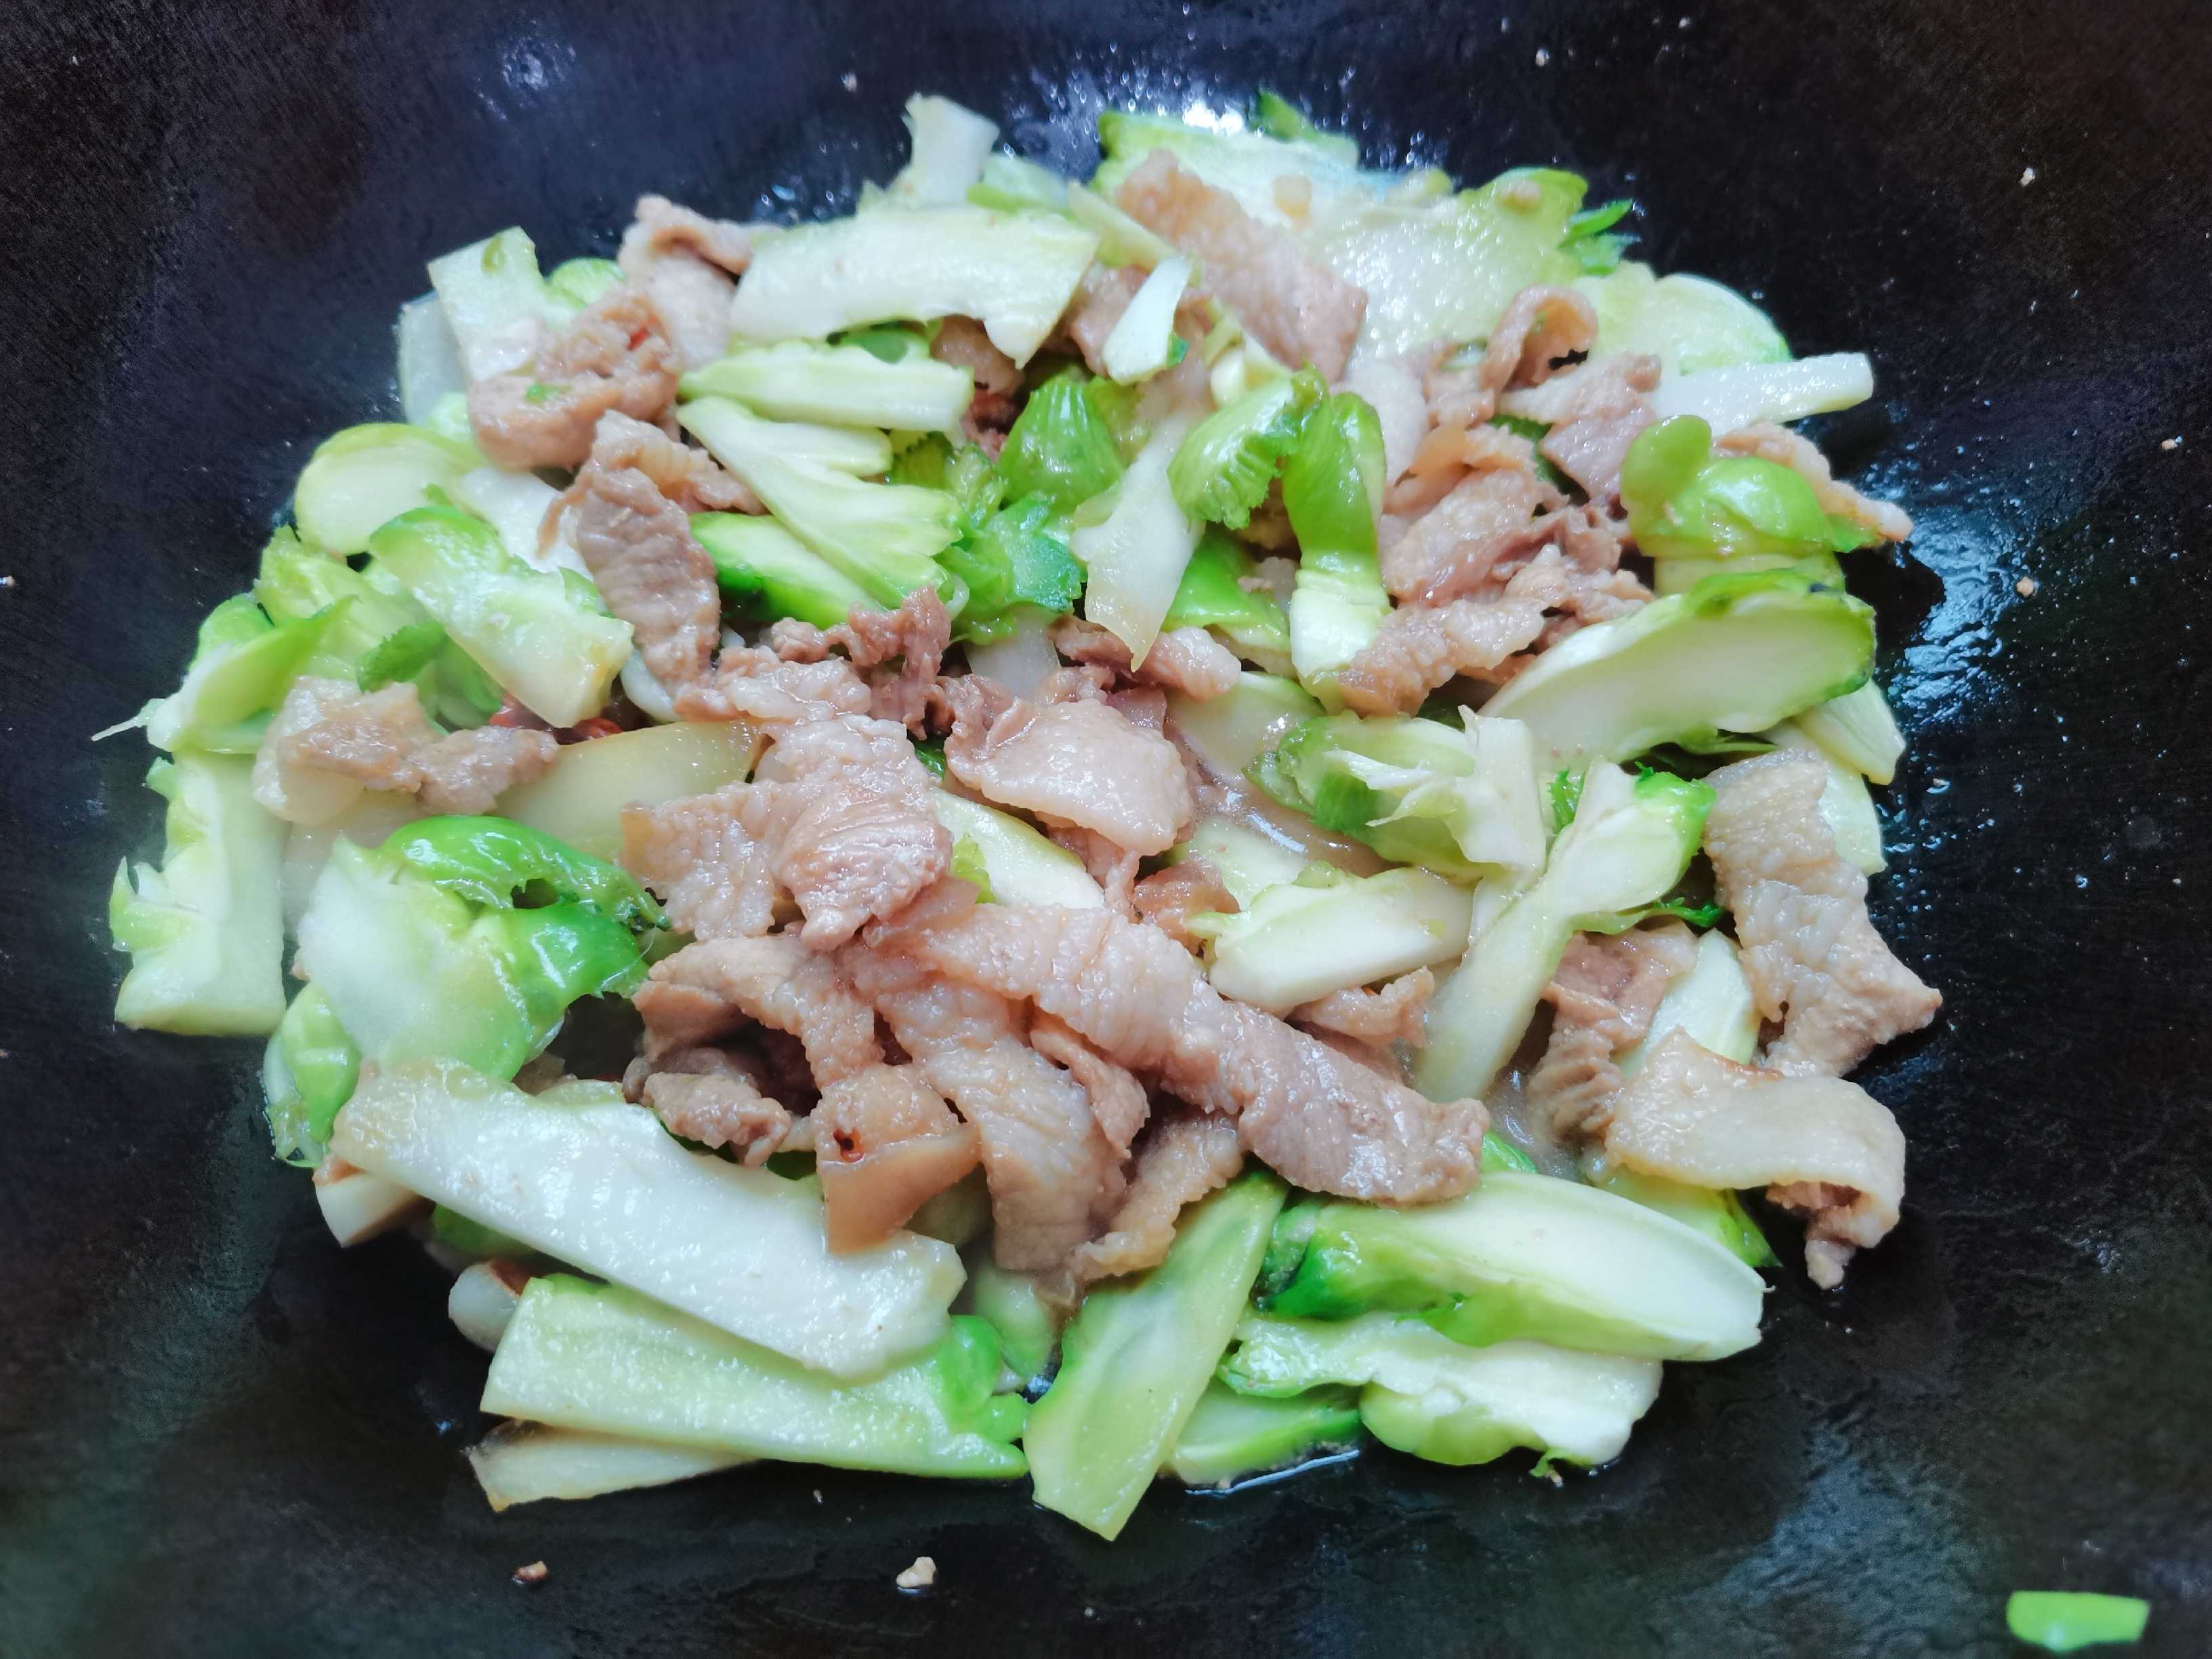 Stir-fried Pork with Vegetables recipe